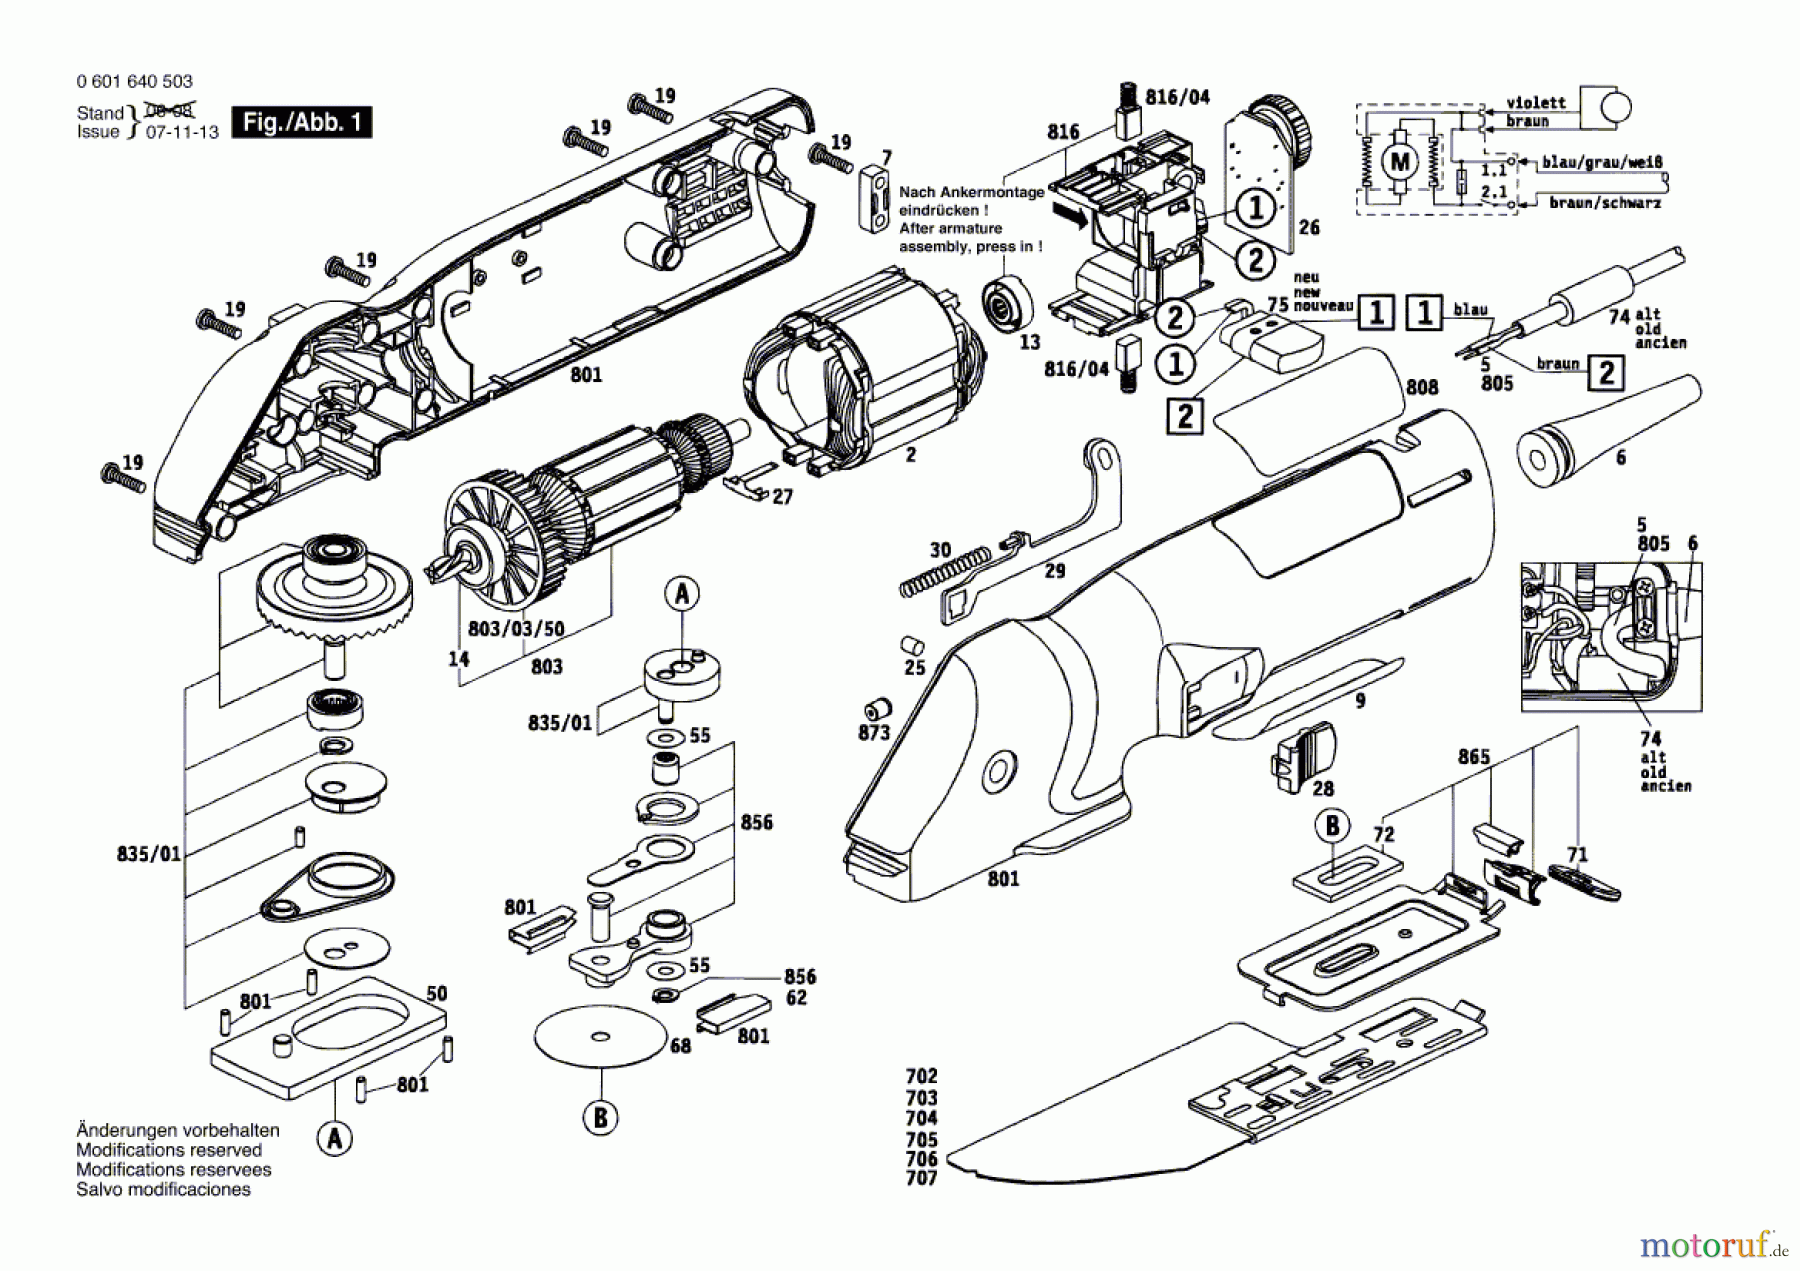  Bosch Werkzeug Feinschnittsäge GFS 350 E Seite 1